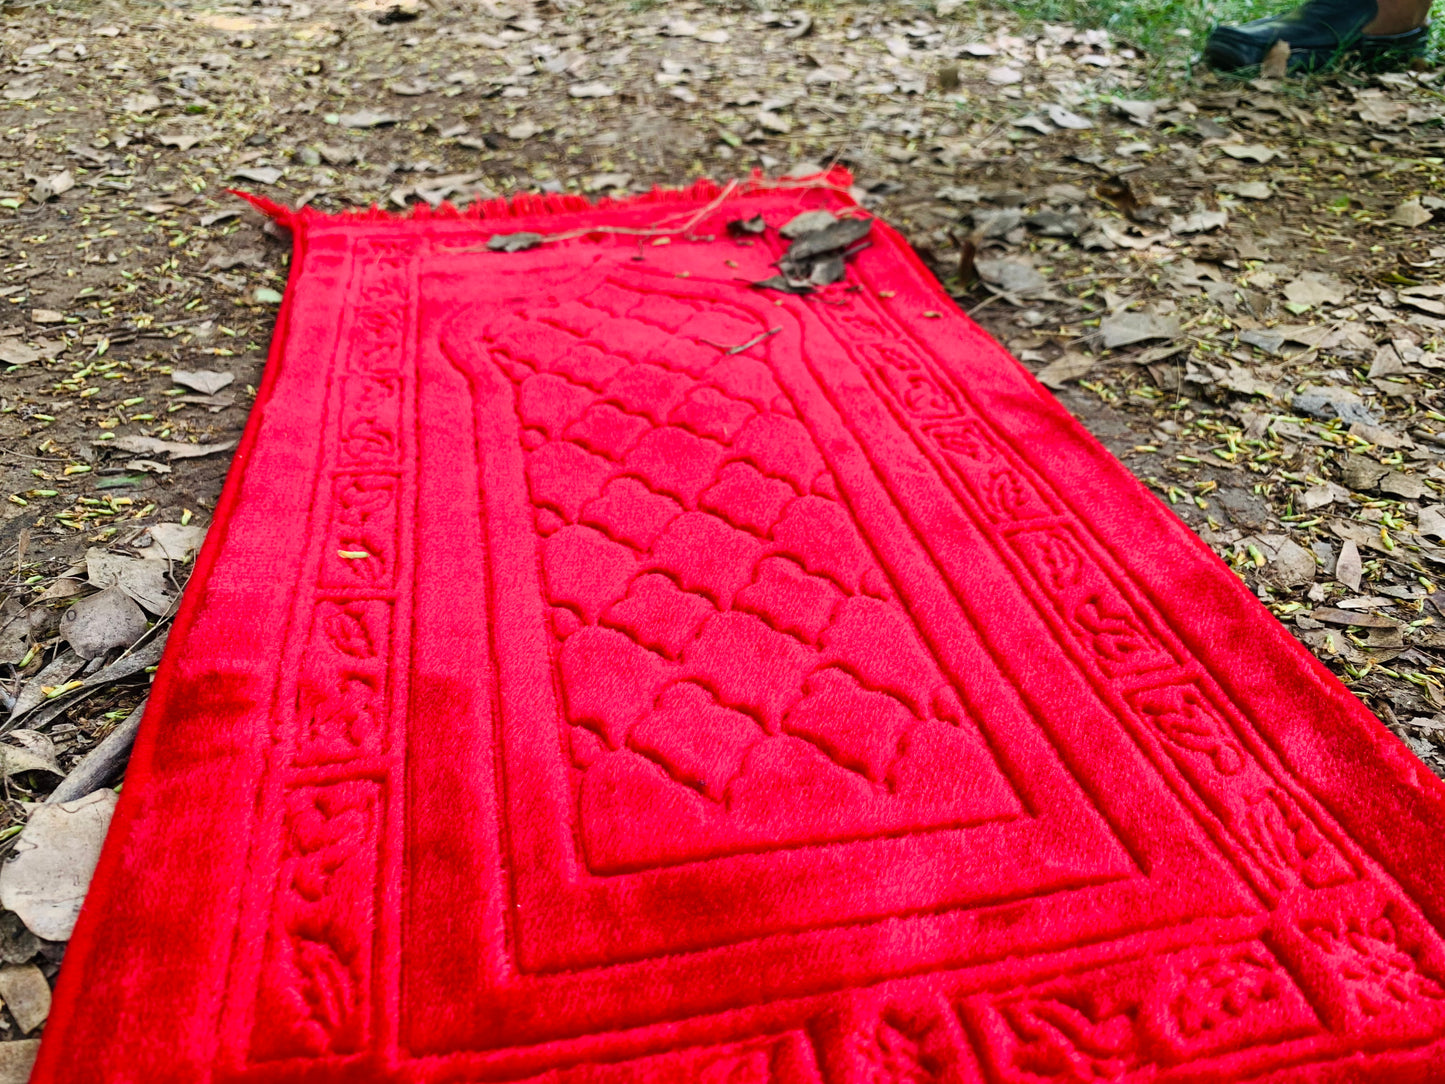 Baby foaming prayer mat